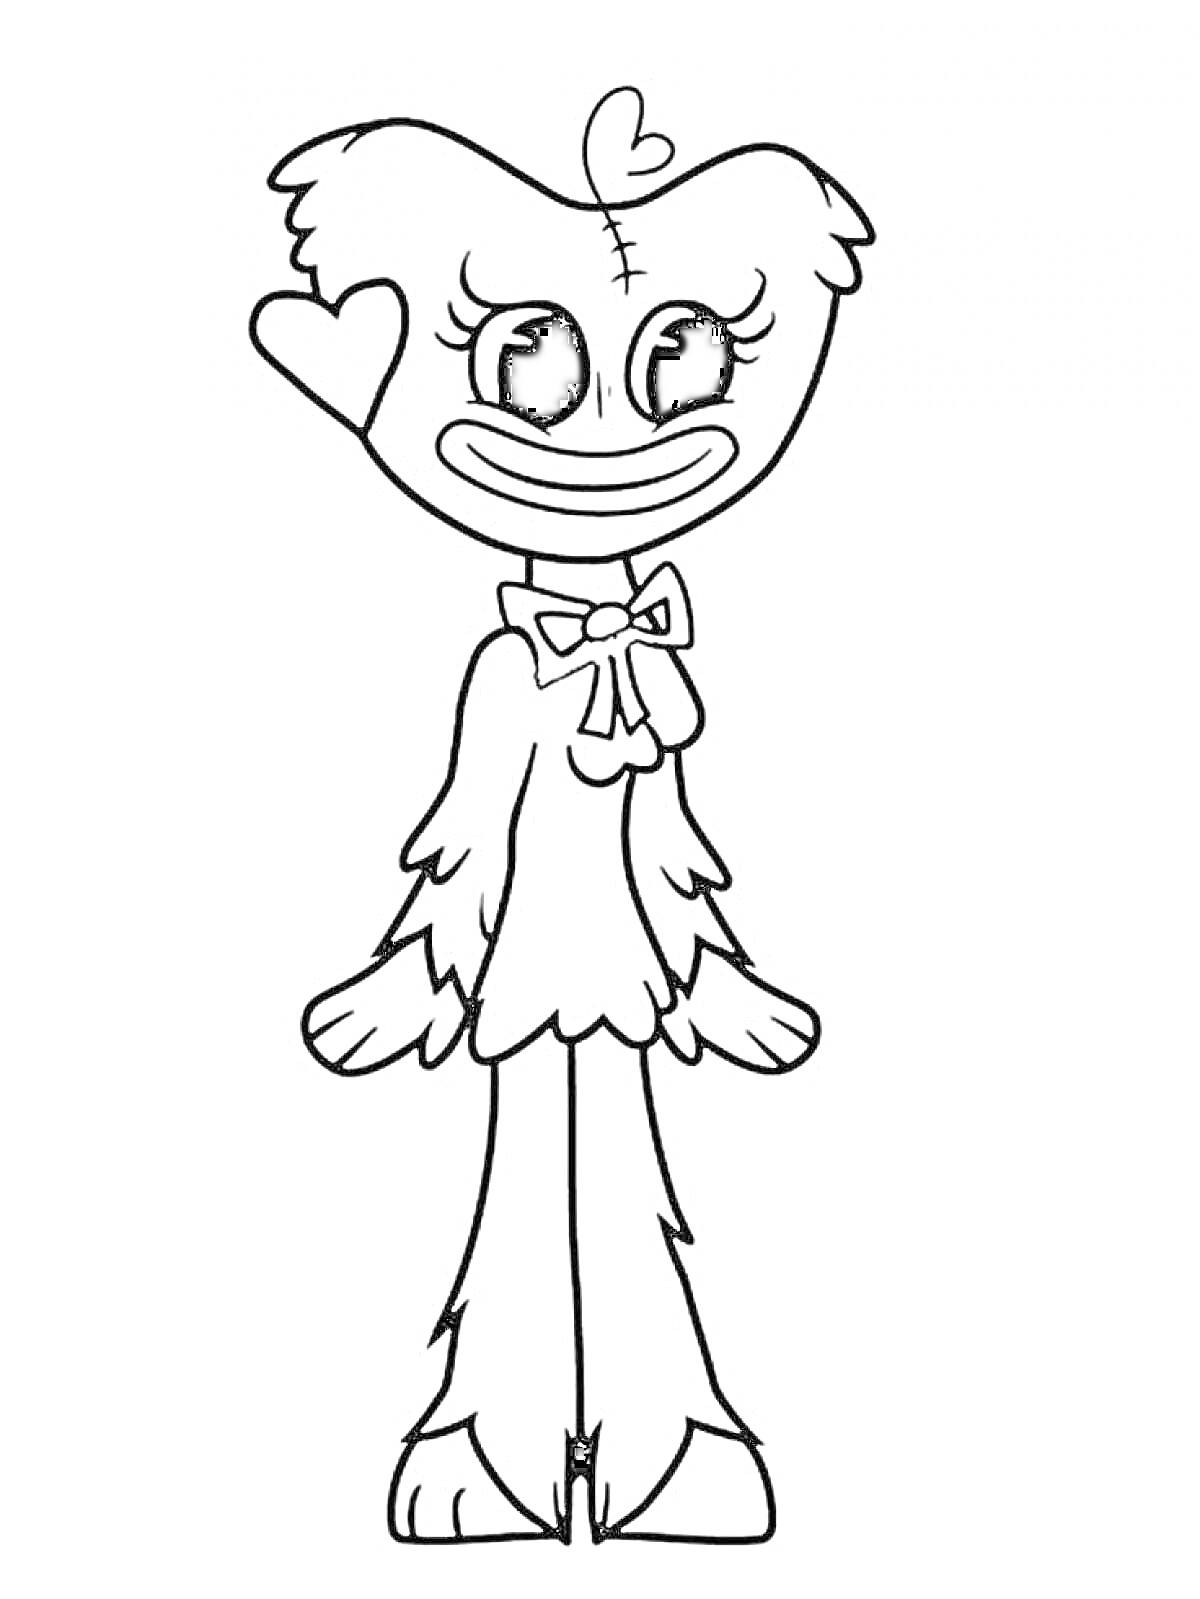 Раскраска Персонаж из Poppy Playtime с сердечком на лице и бантиком